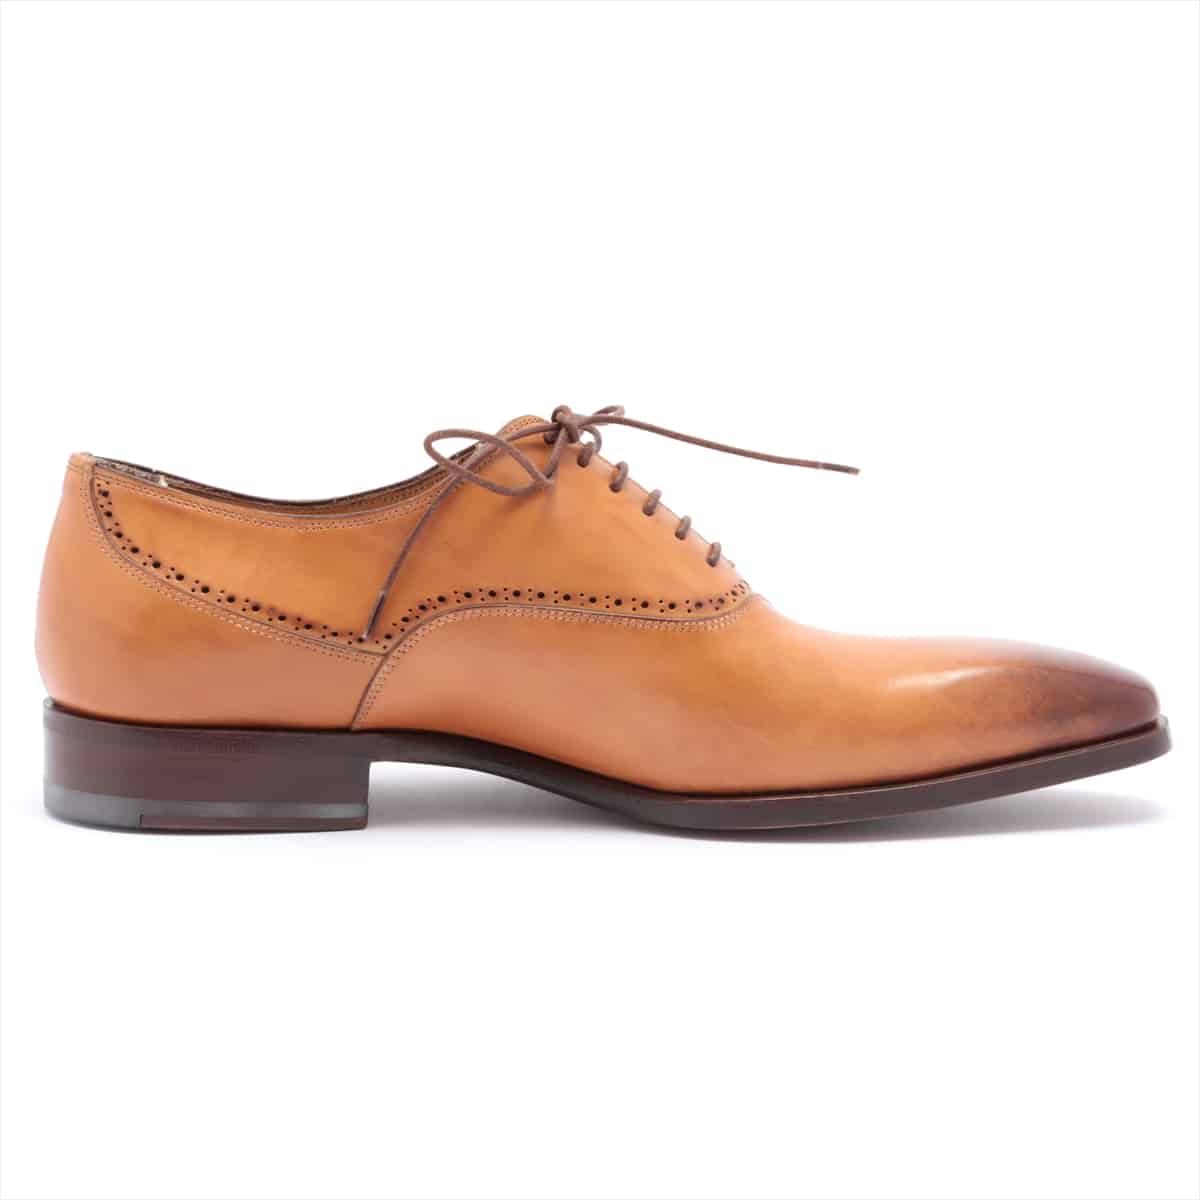 Santoni Leather Leather shoes 6 1/2 Men's Brown